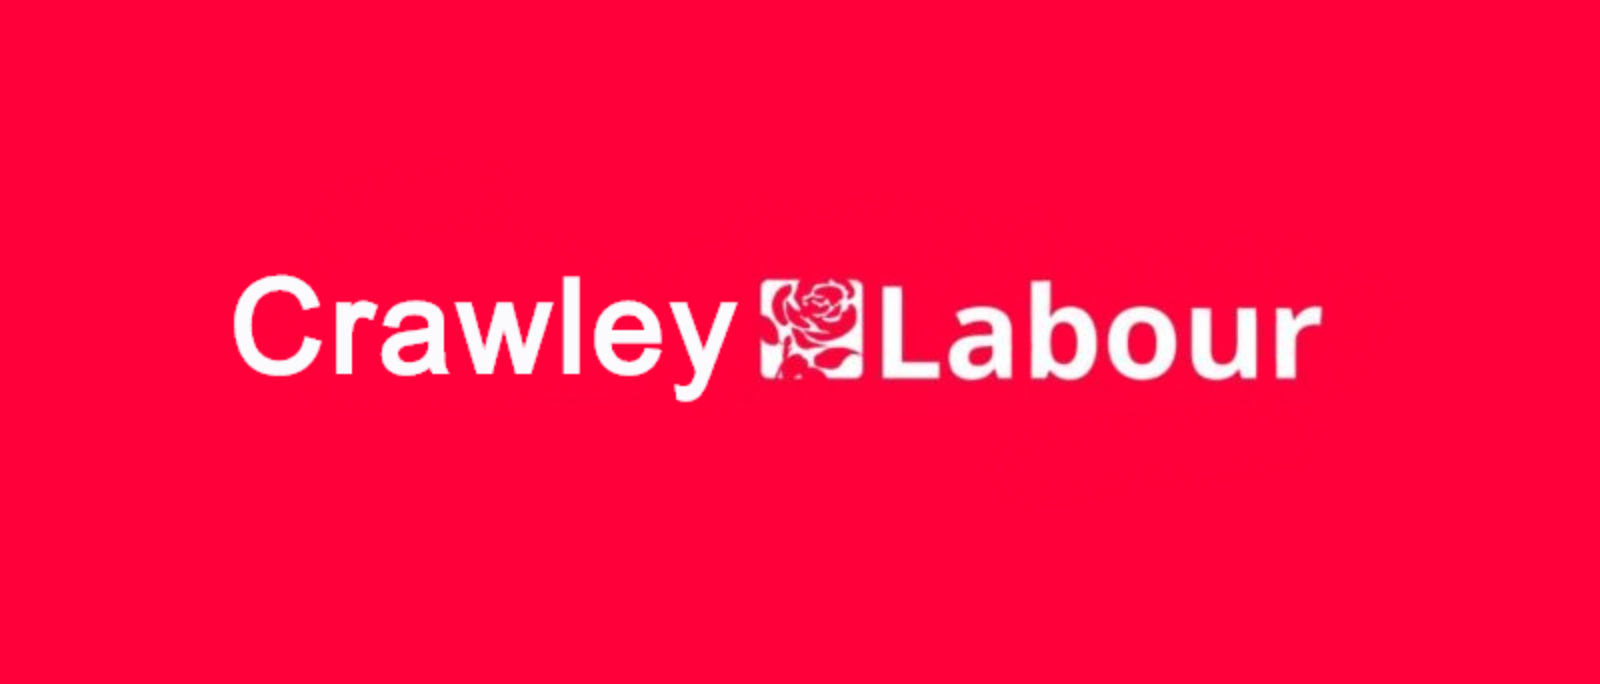 Crawley Labour